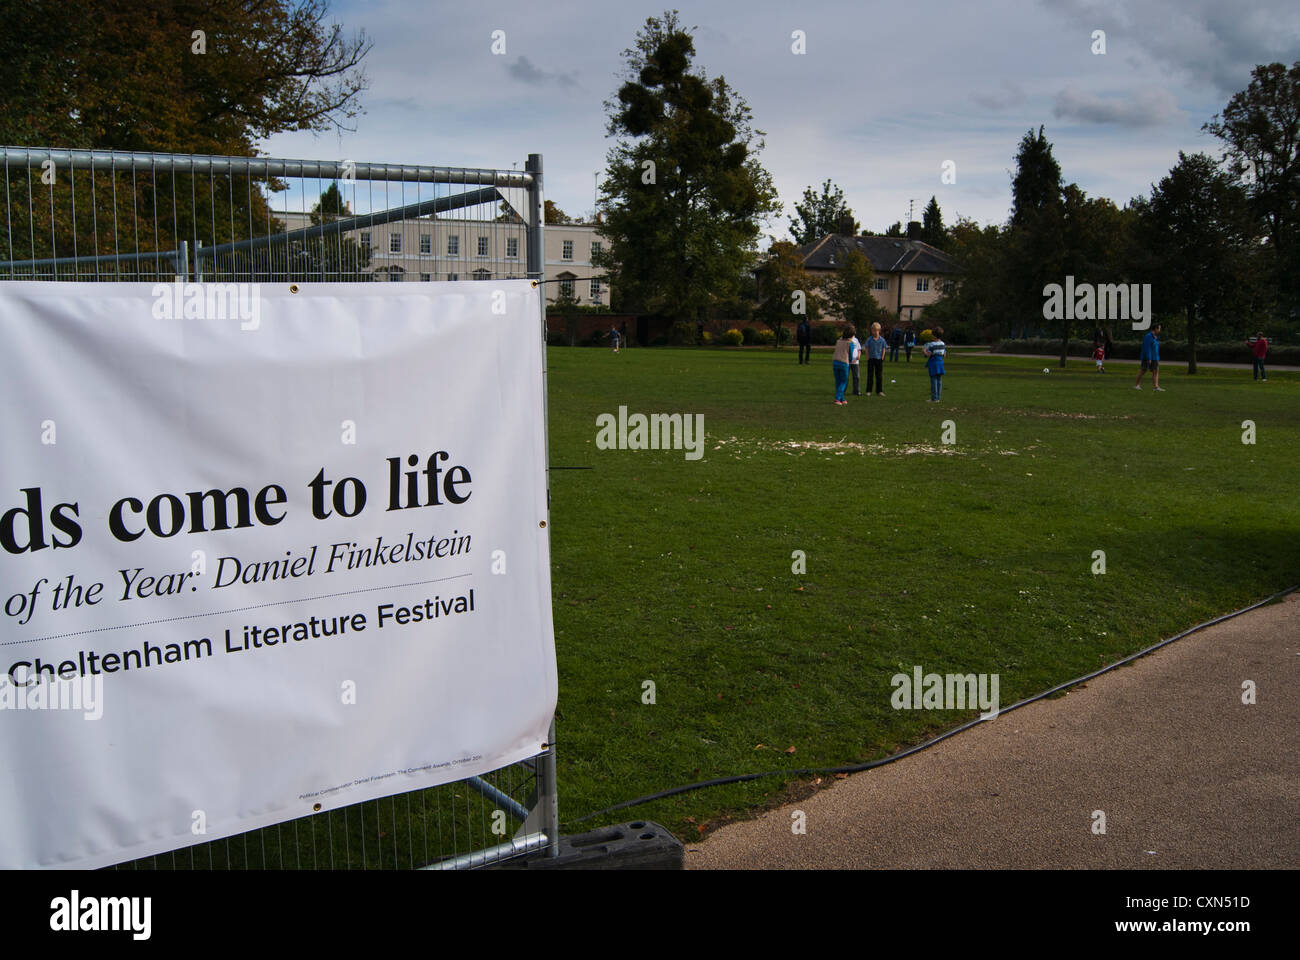 Cheltenham Festival of Literature, October 2012 Stock Photo